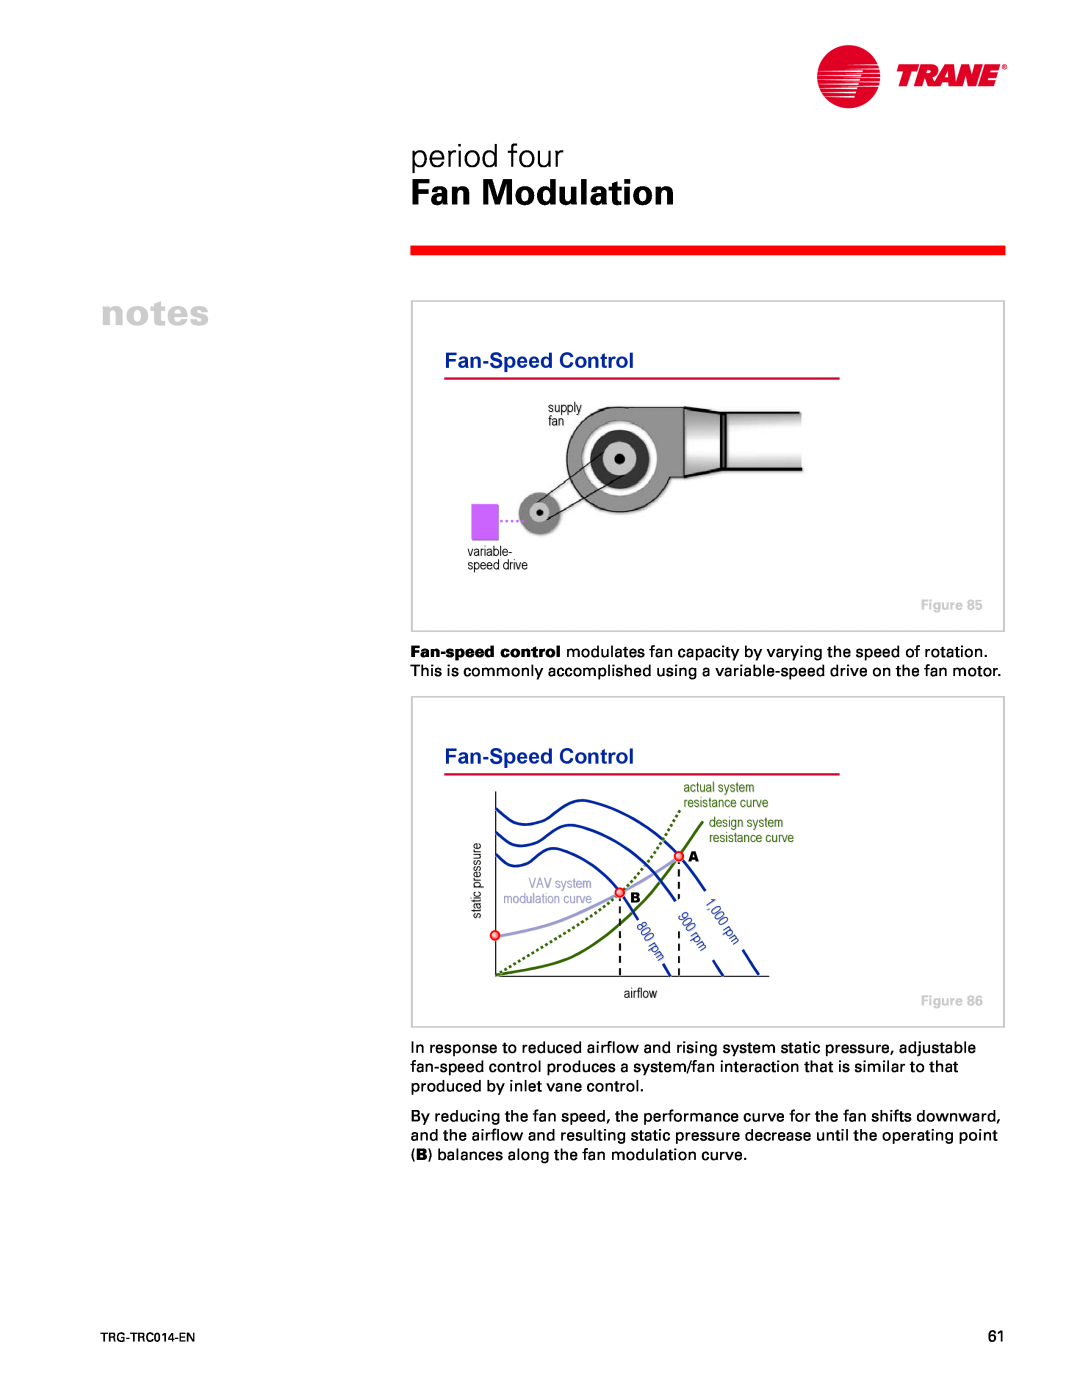 Trane TRG-TRC014-EN manual Fan-SpeedControl, Fan Modulation, period four, 8 0 0 r p m 